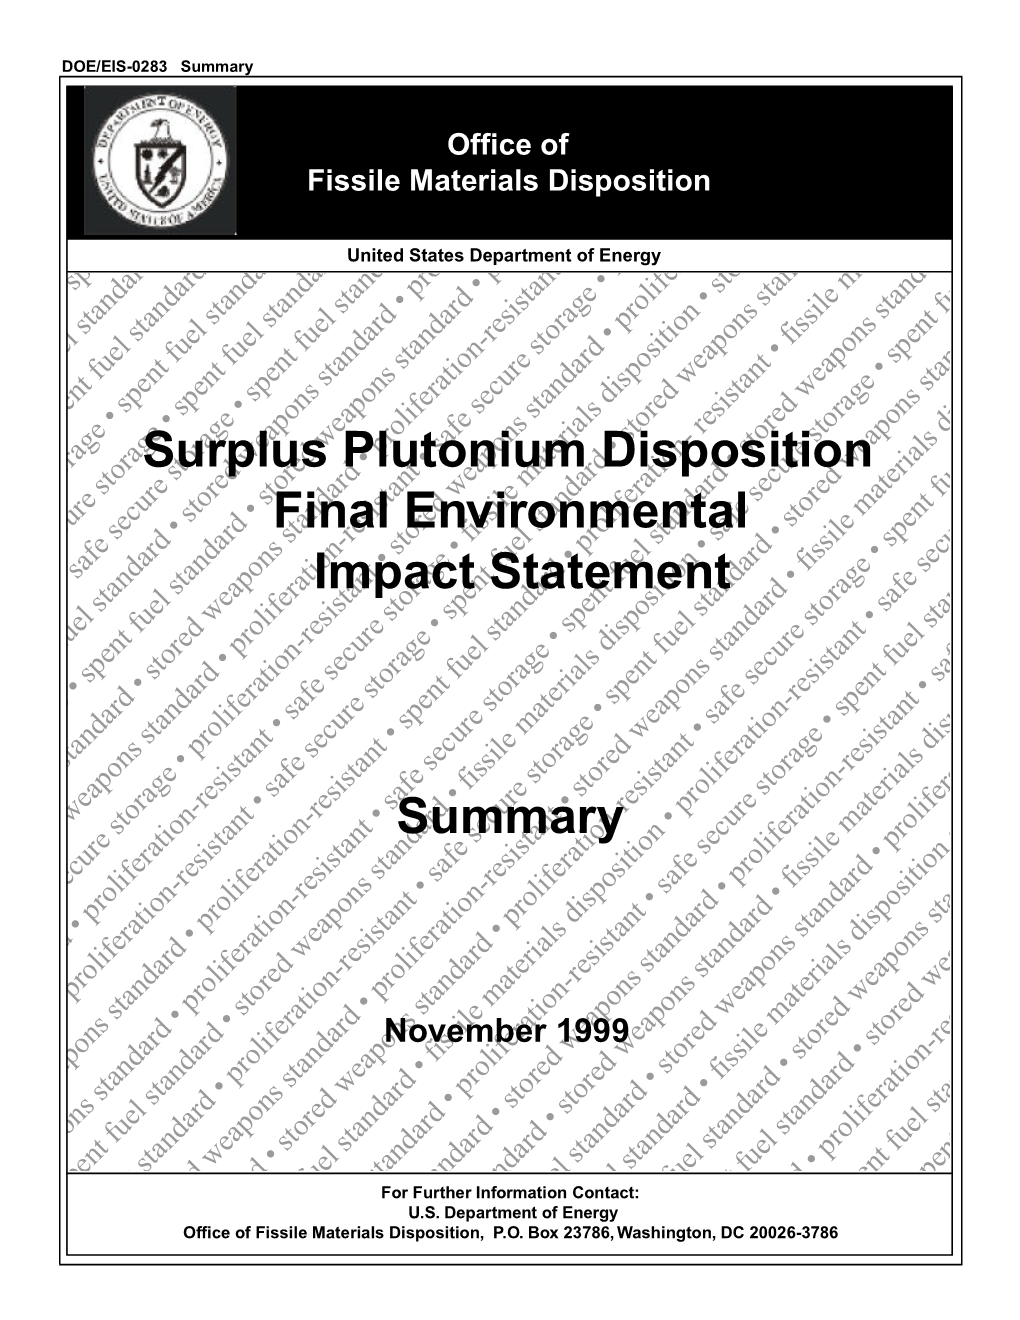 DOE/EIS-0283; Surplus Plutonium Disposition Final Environmental